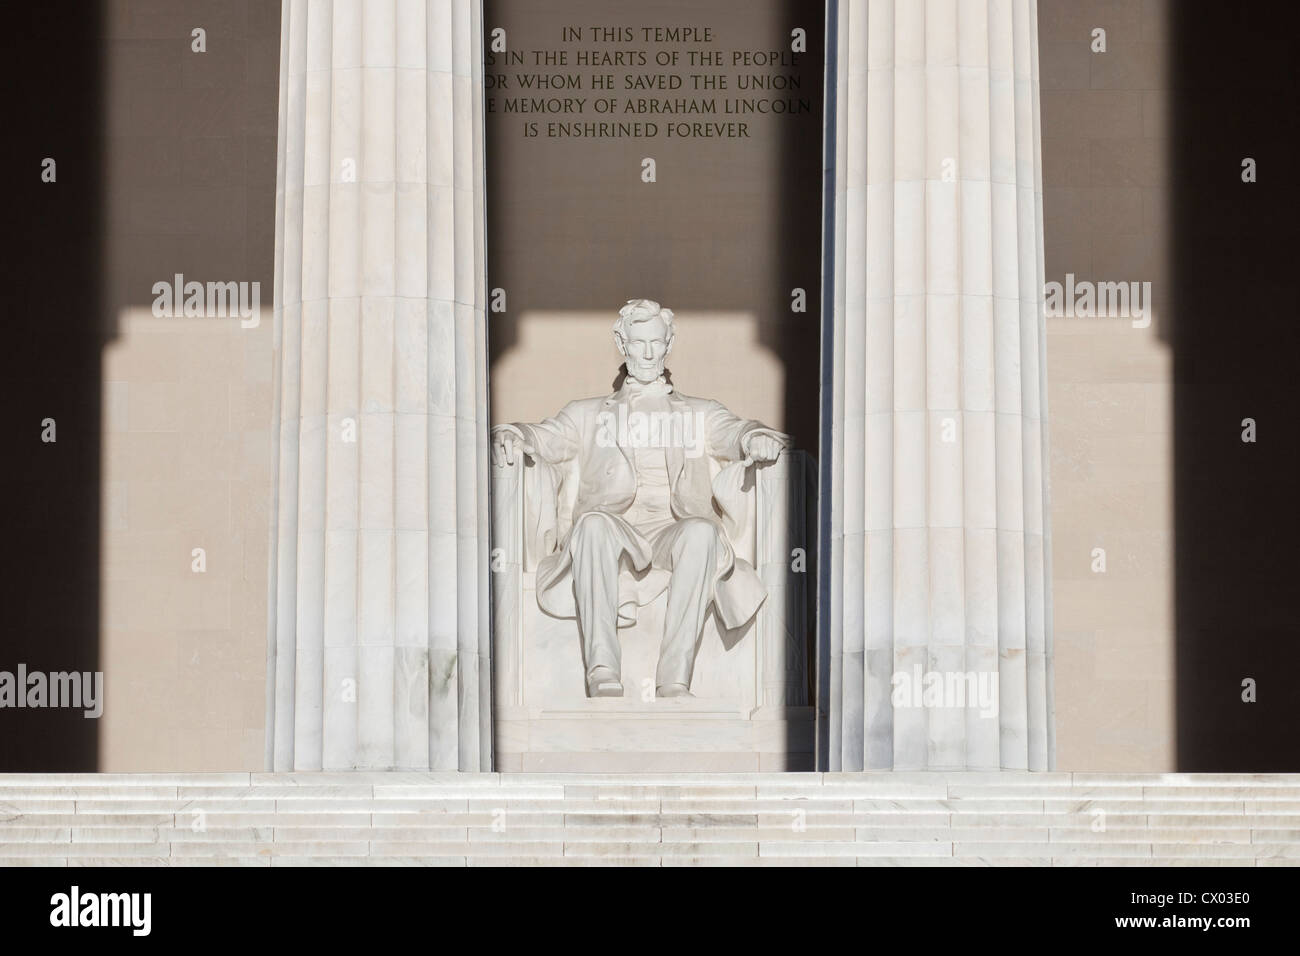 Lincoln Memorial, Washington, DC, USA Banque D'Images